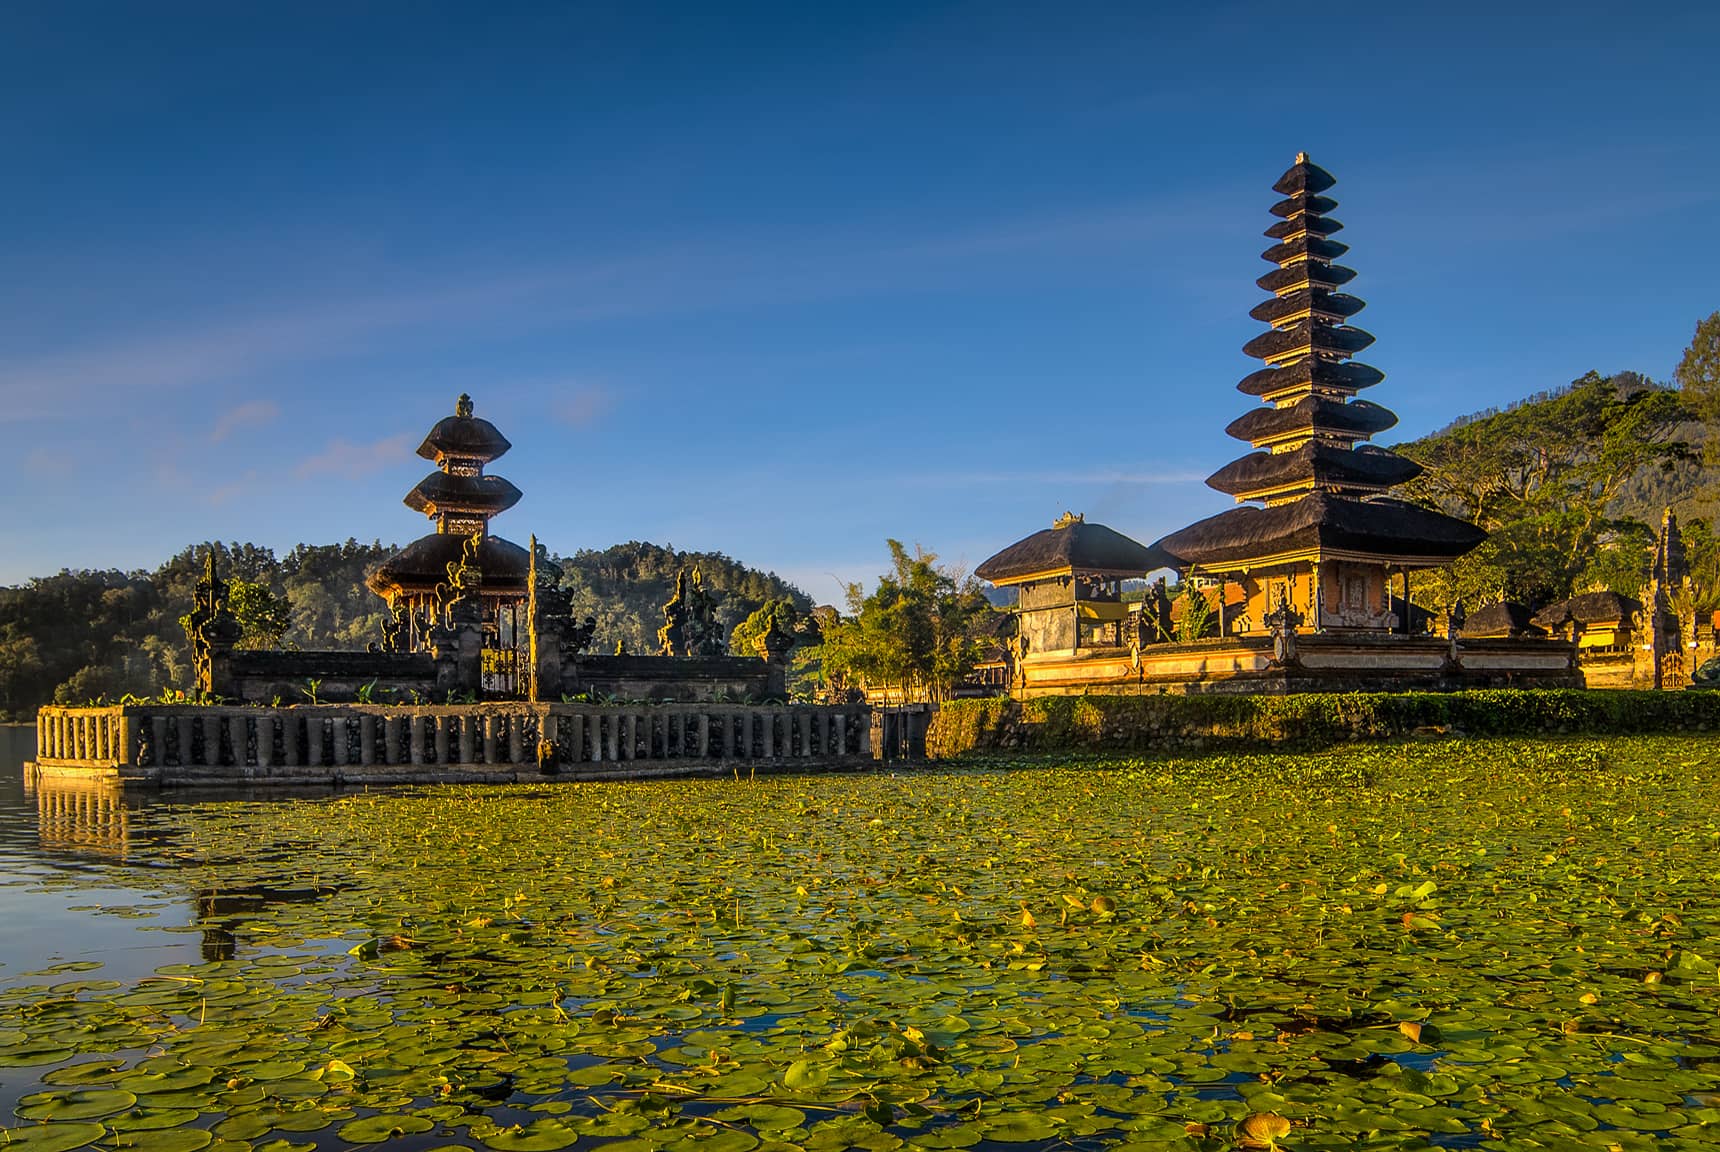 Professional photos of Hindu temples in Bali - the temple at Danau Bratan